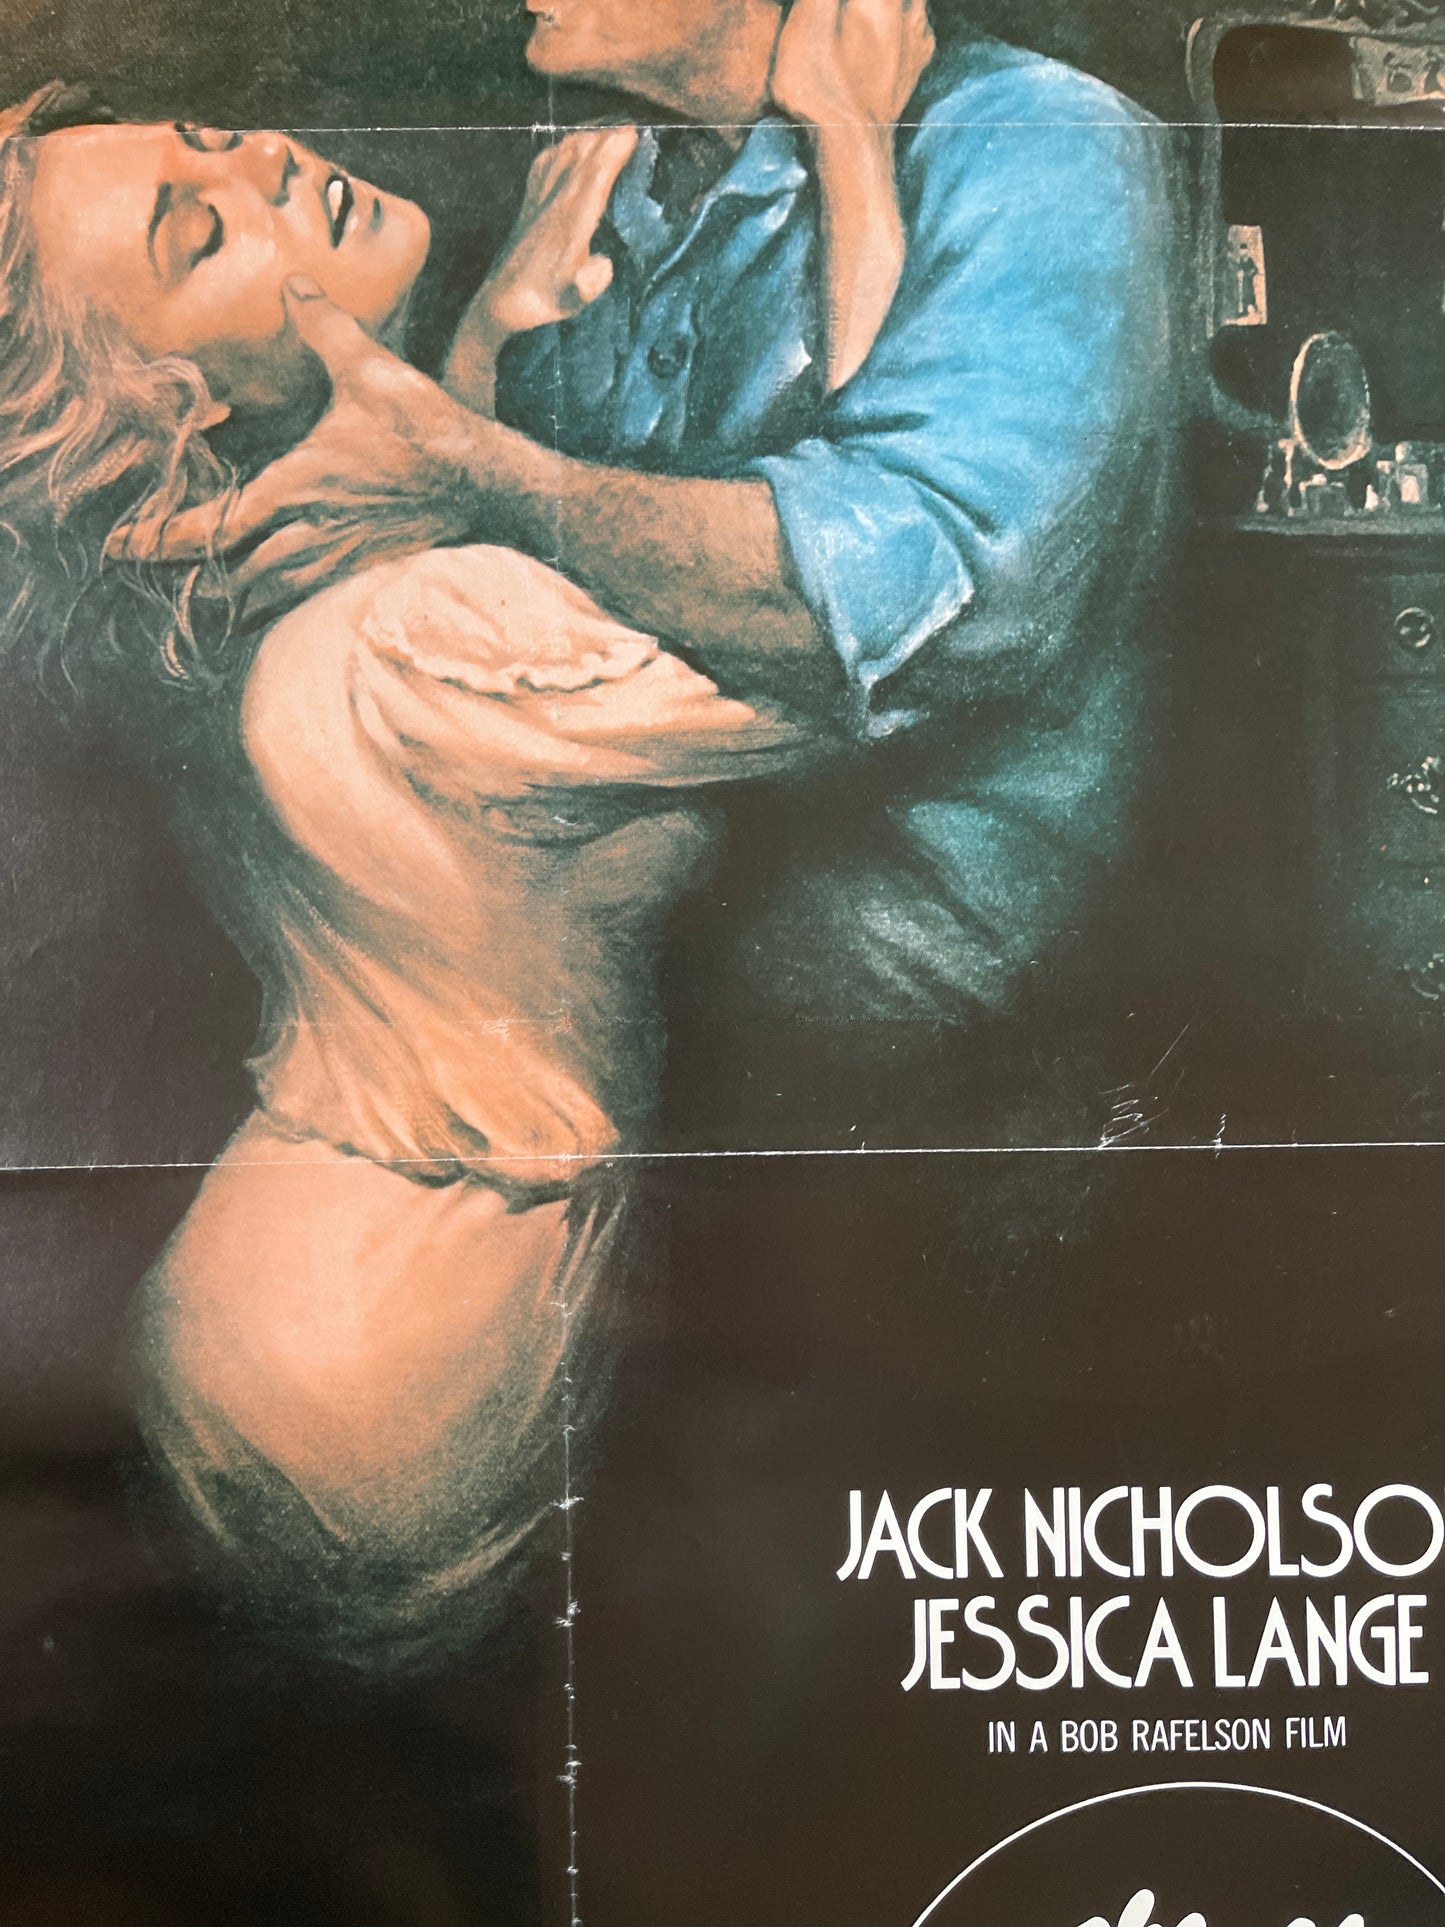 The Postman Always Rings Twice (1981) Jack Nicholson - One Sheet